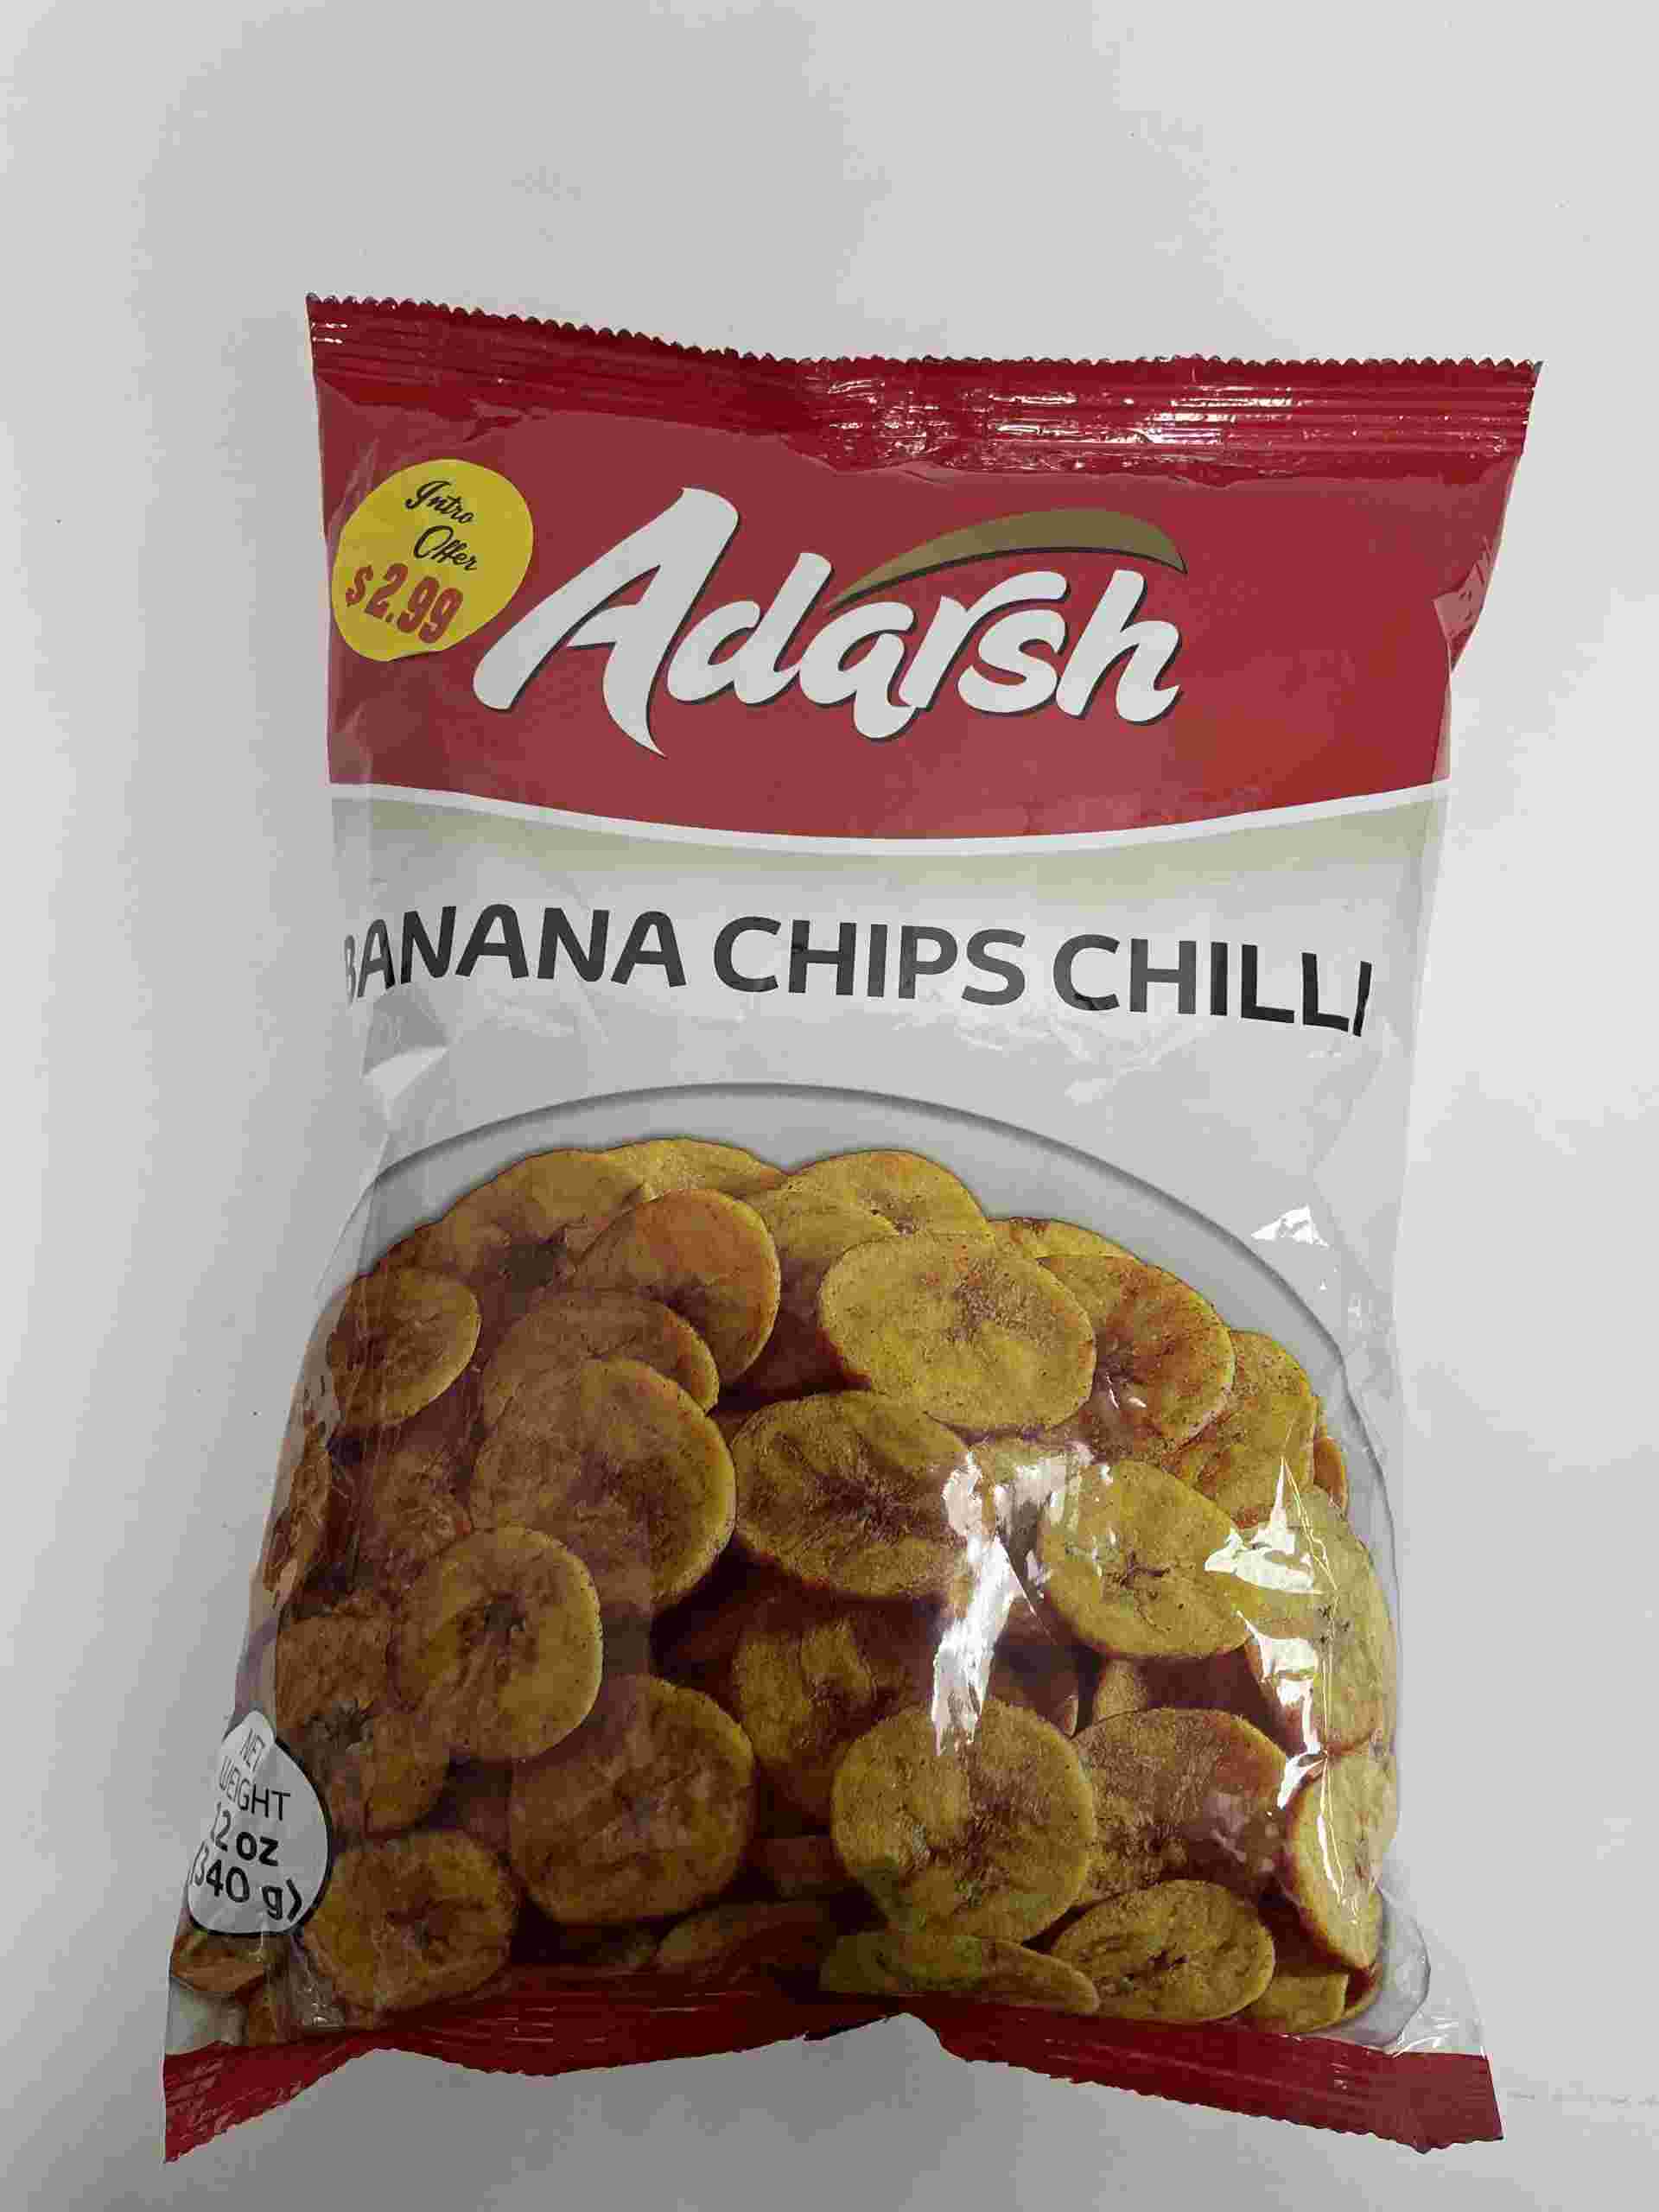 Adarsh Banana Chips Chilli